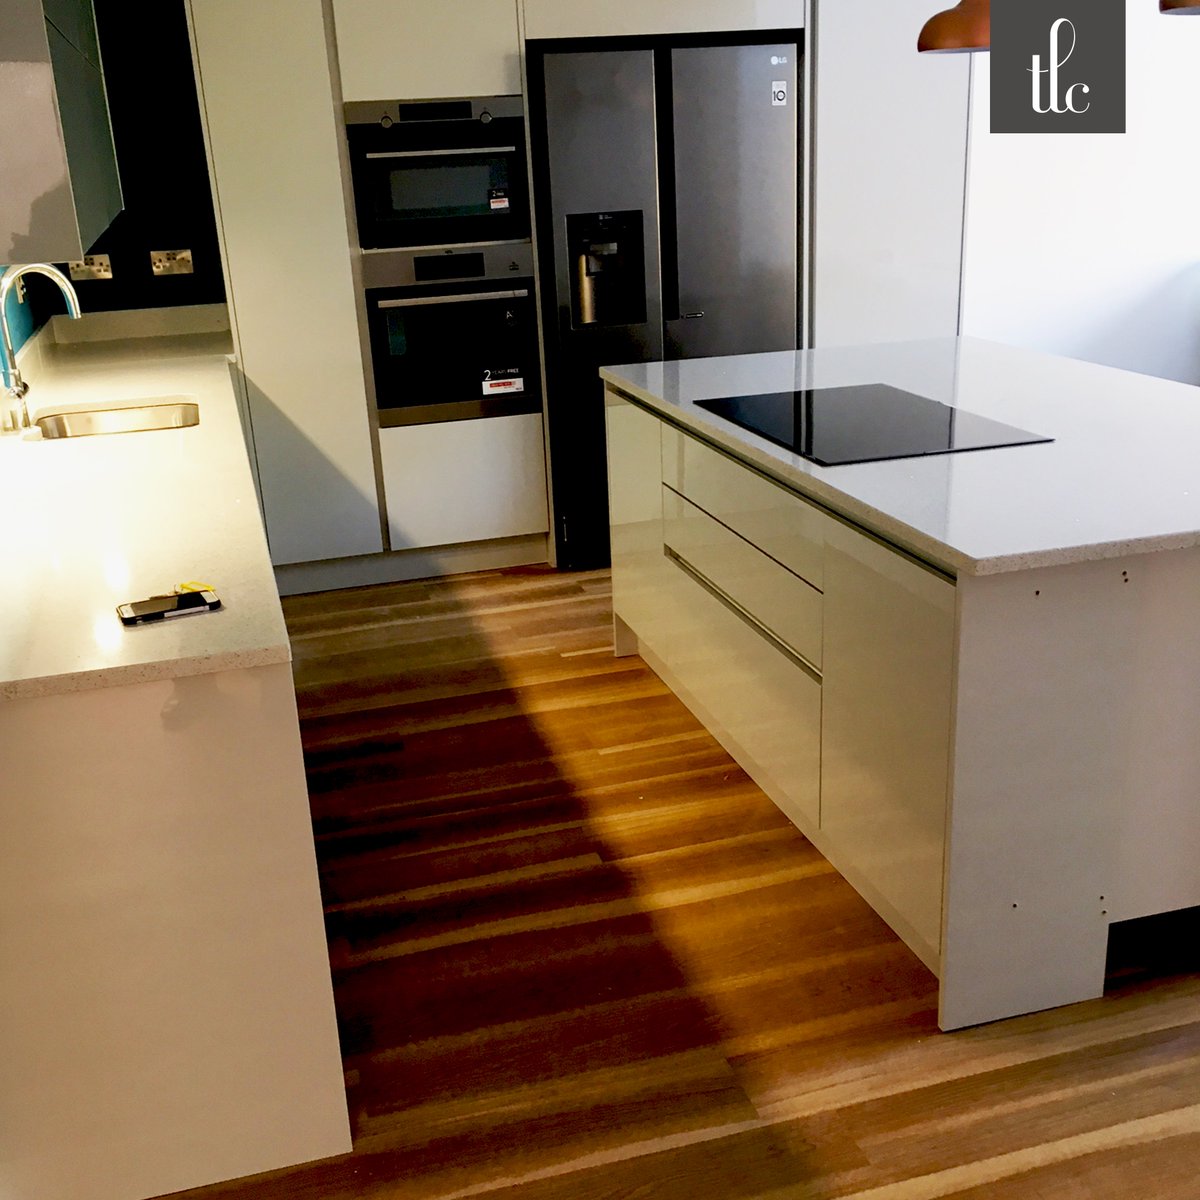 Kitchen fitted with Massimo English Oak by CAD Design & Build Services, Garforth

#flooring #kitchen #lvt #luxuryvinyltile #massimo #englishoak